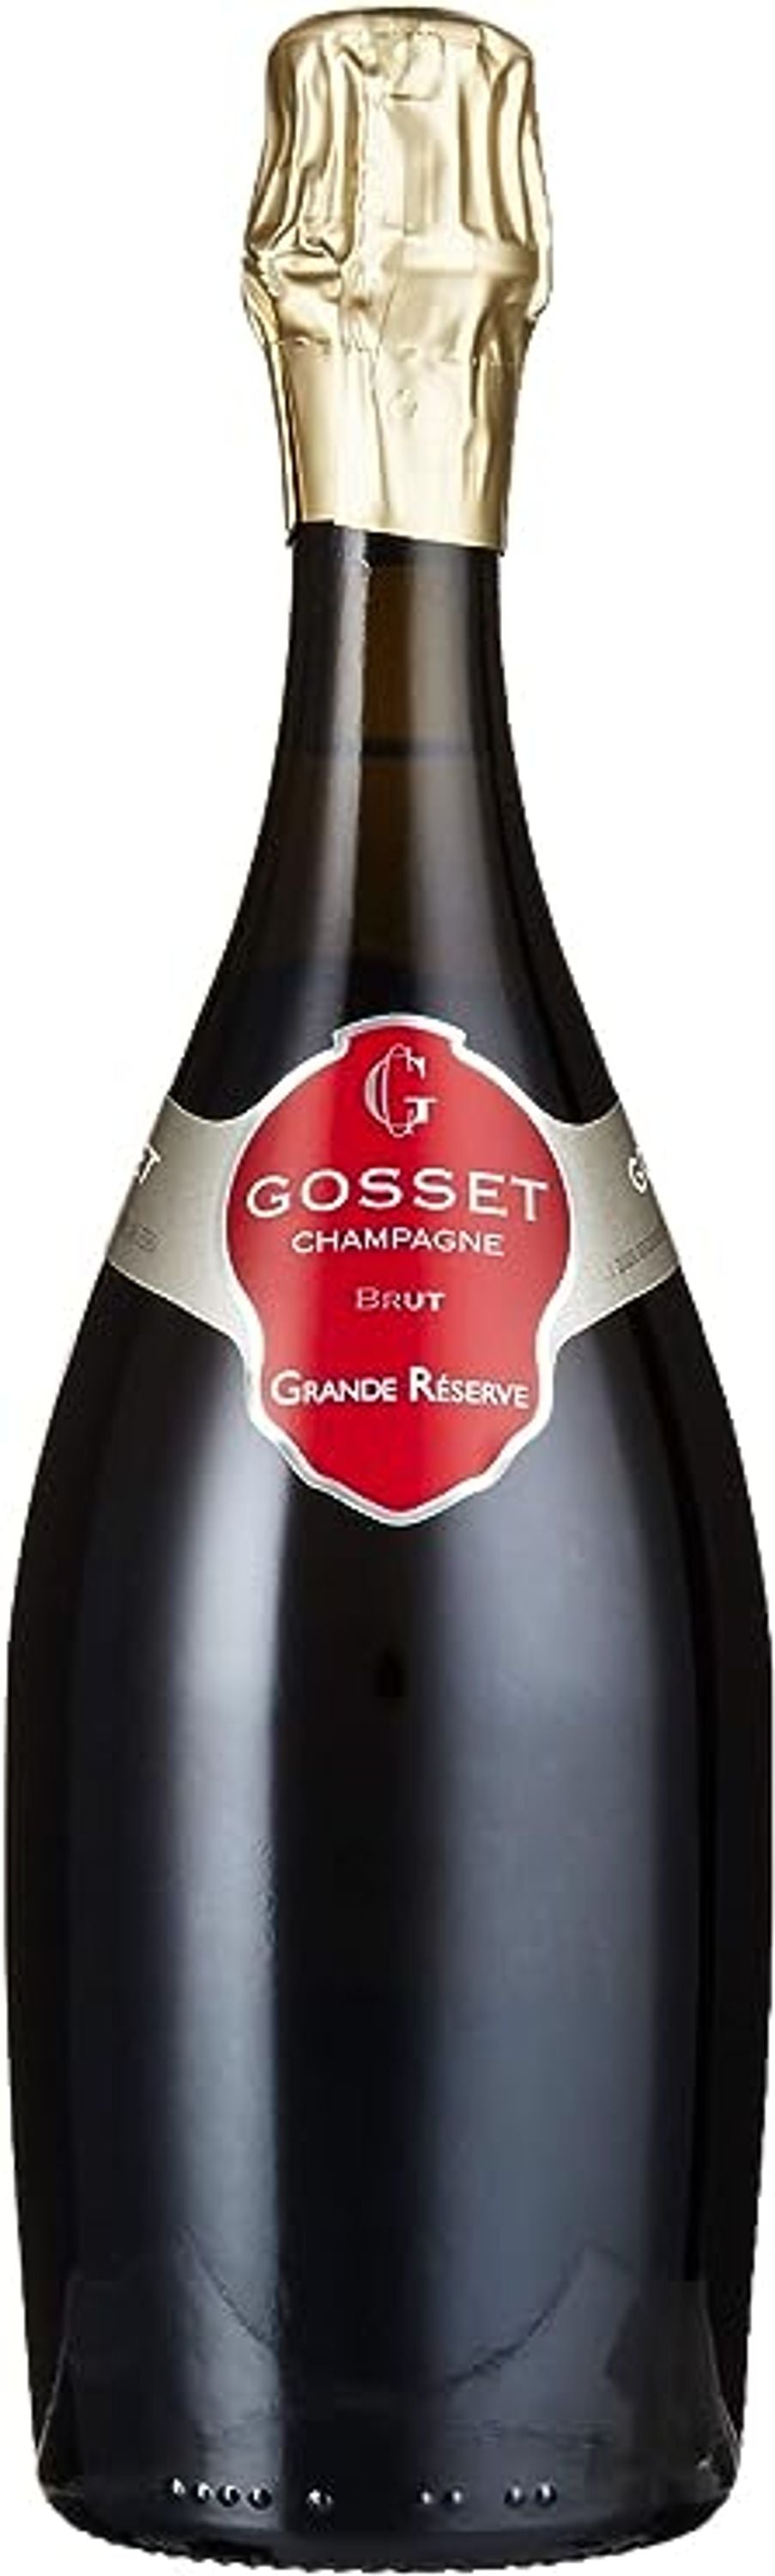 Gosset Grande Reserve Brut Champagne 0.75l, alc. 12% by volume